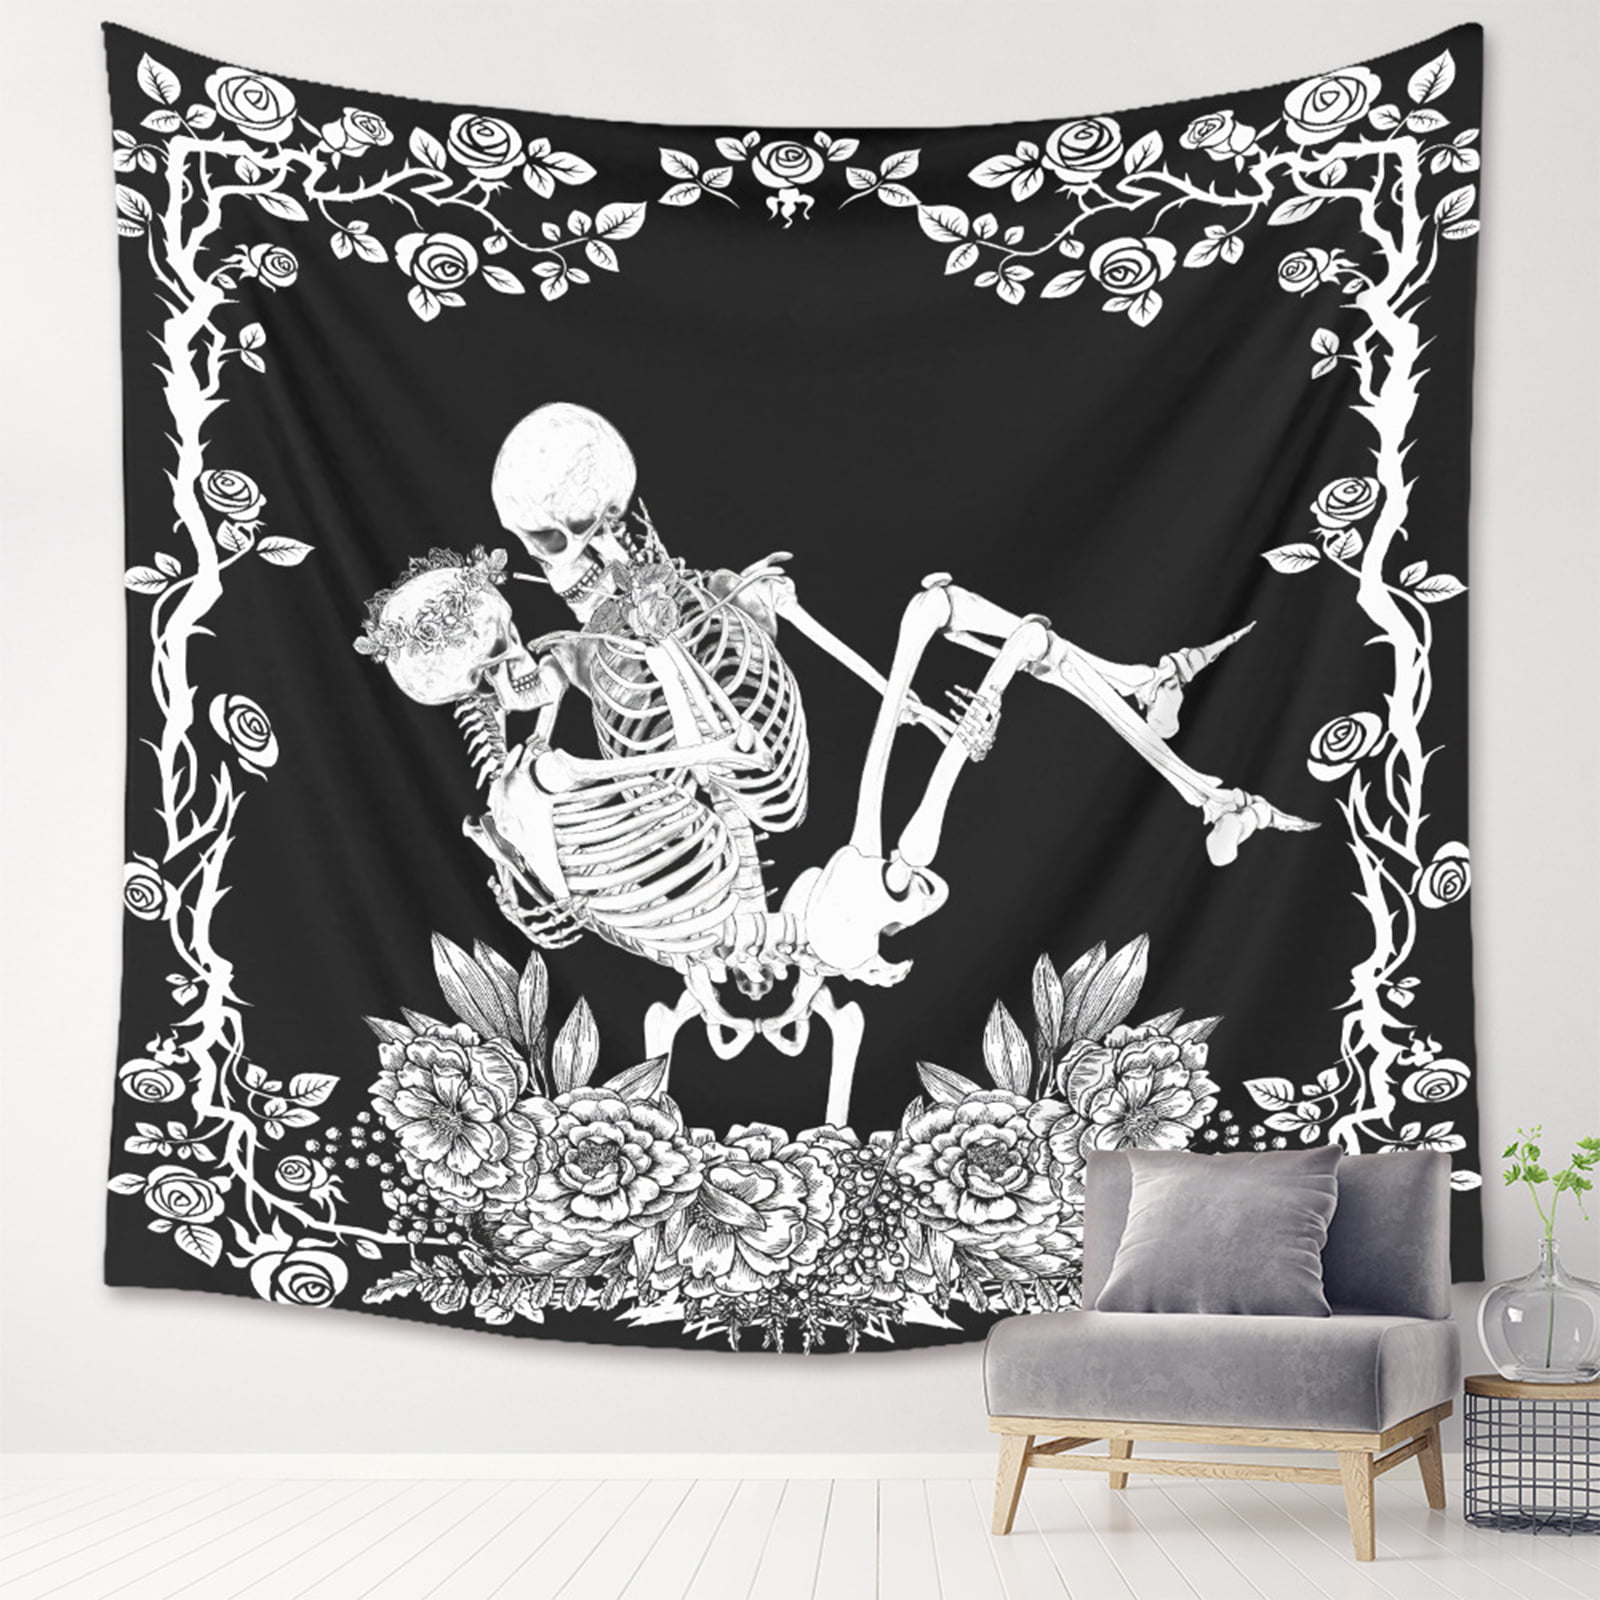 Skull Wall Tapestry,Skull Wall Art Gift,Boho Skull Home Decor,Flower Skull Wall Tapestry,Fantasy Wall Painting,Gothic Tapestry Blanket